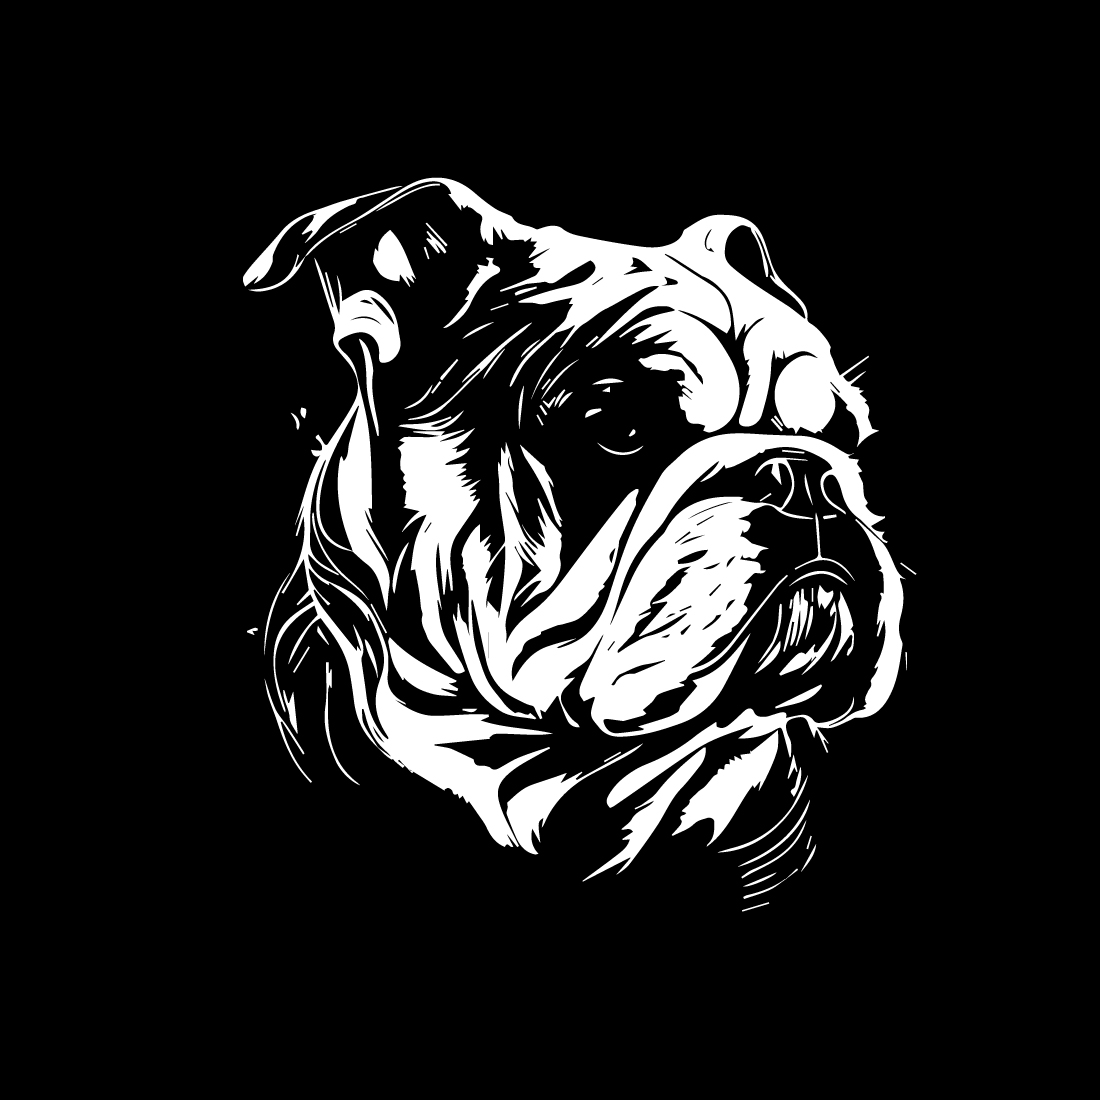 Bull dog T-shirt design preview image.